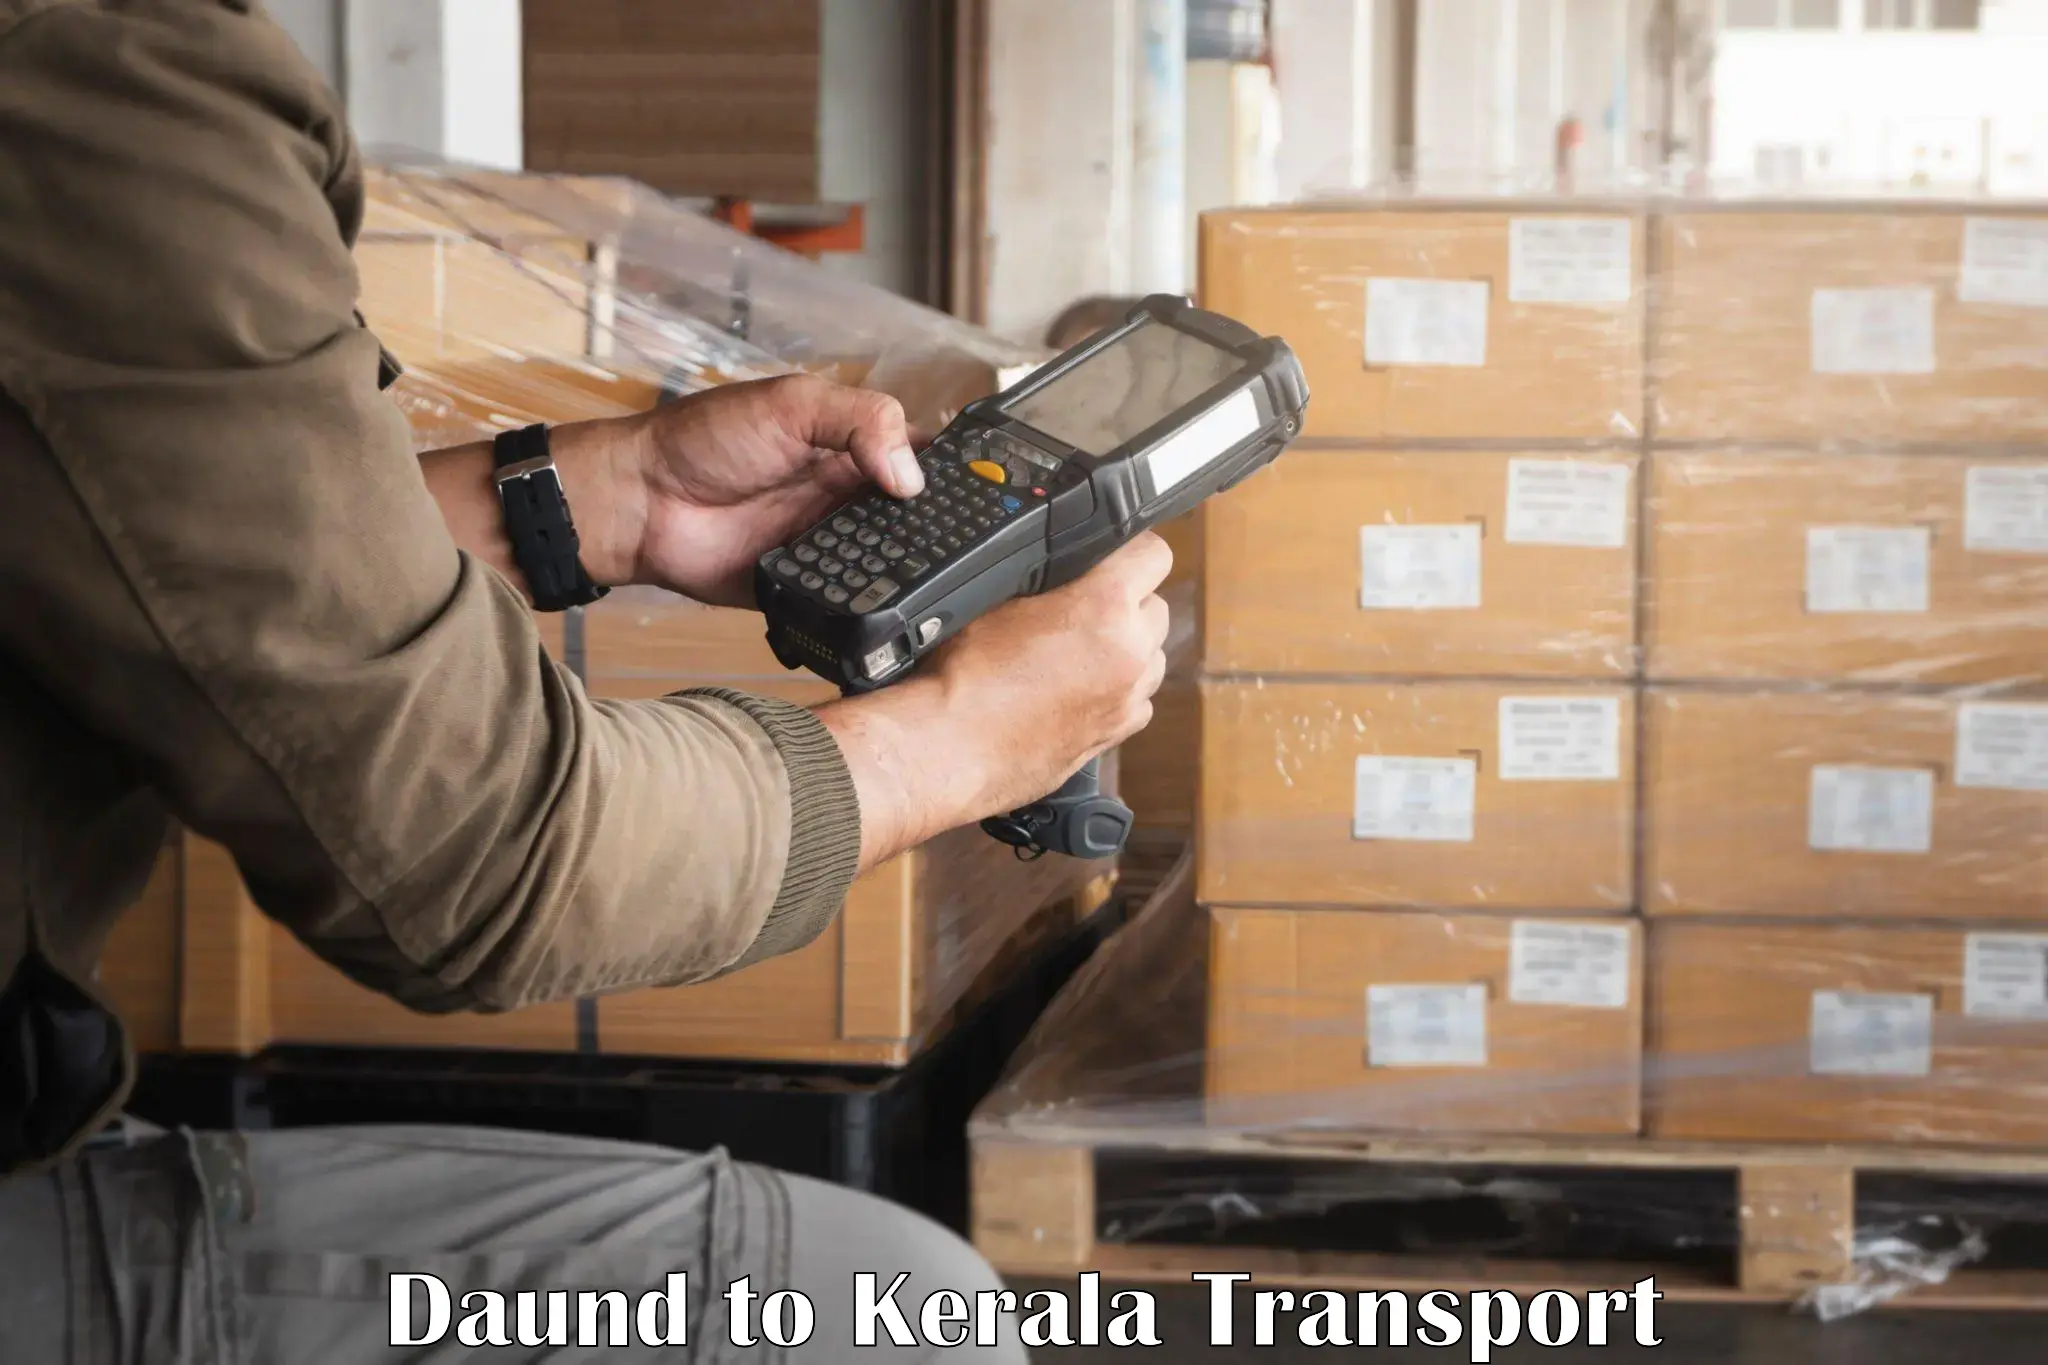 Online transport service Daund to Kerala